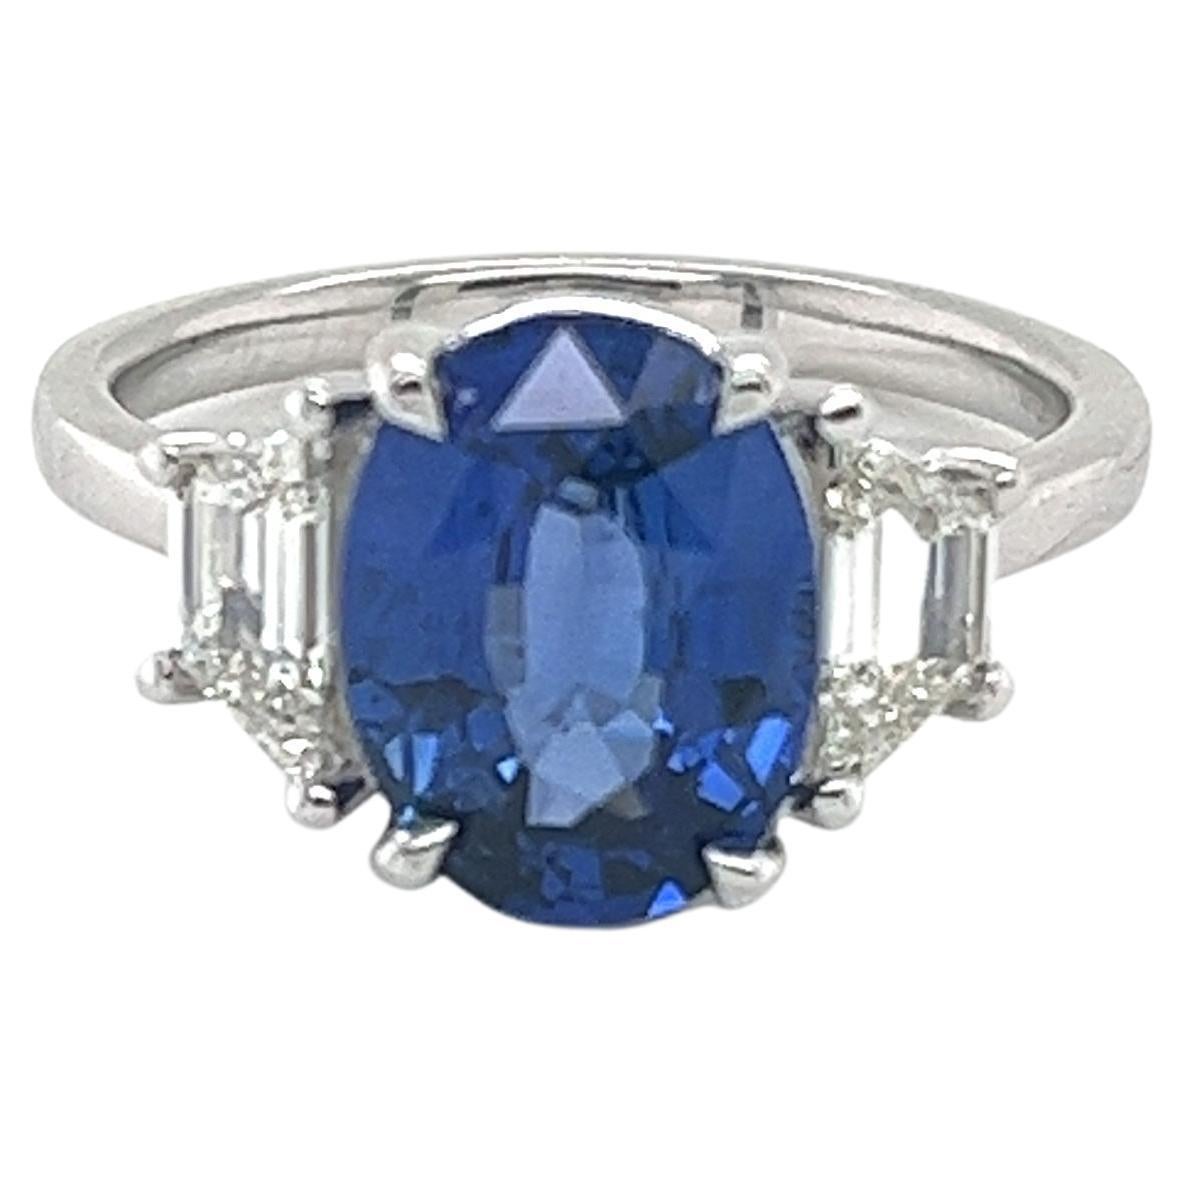 Certified Ceylon Sapphire & Diamond Ring in Platinum